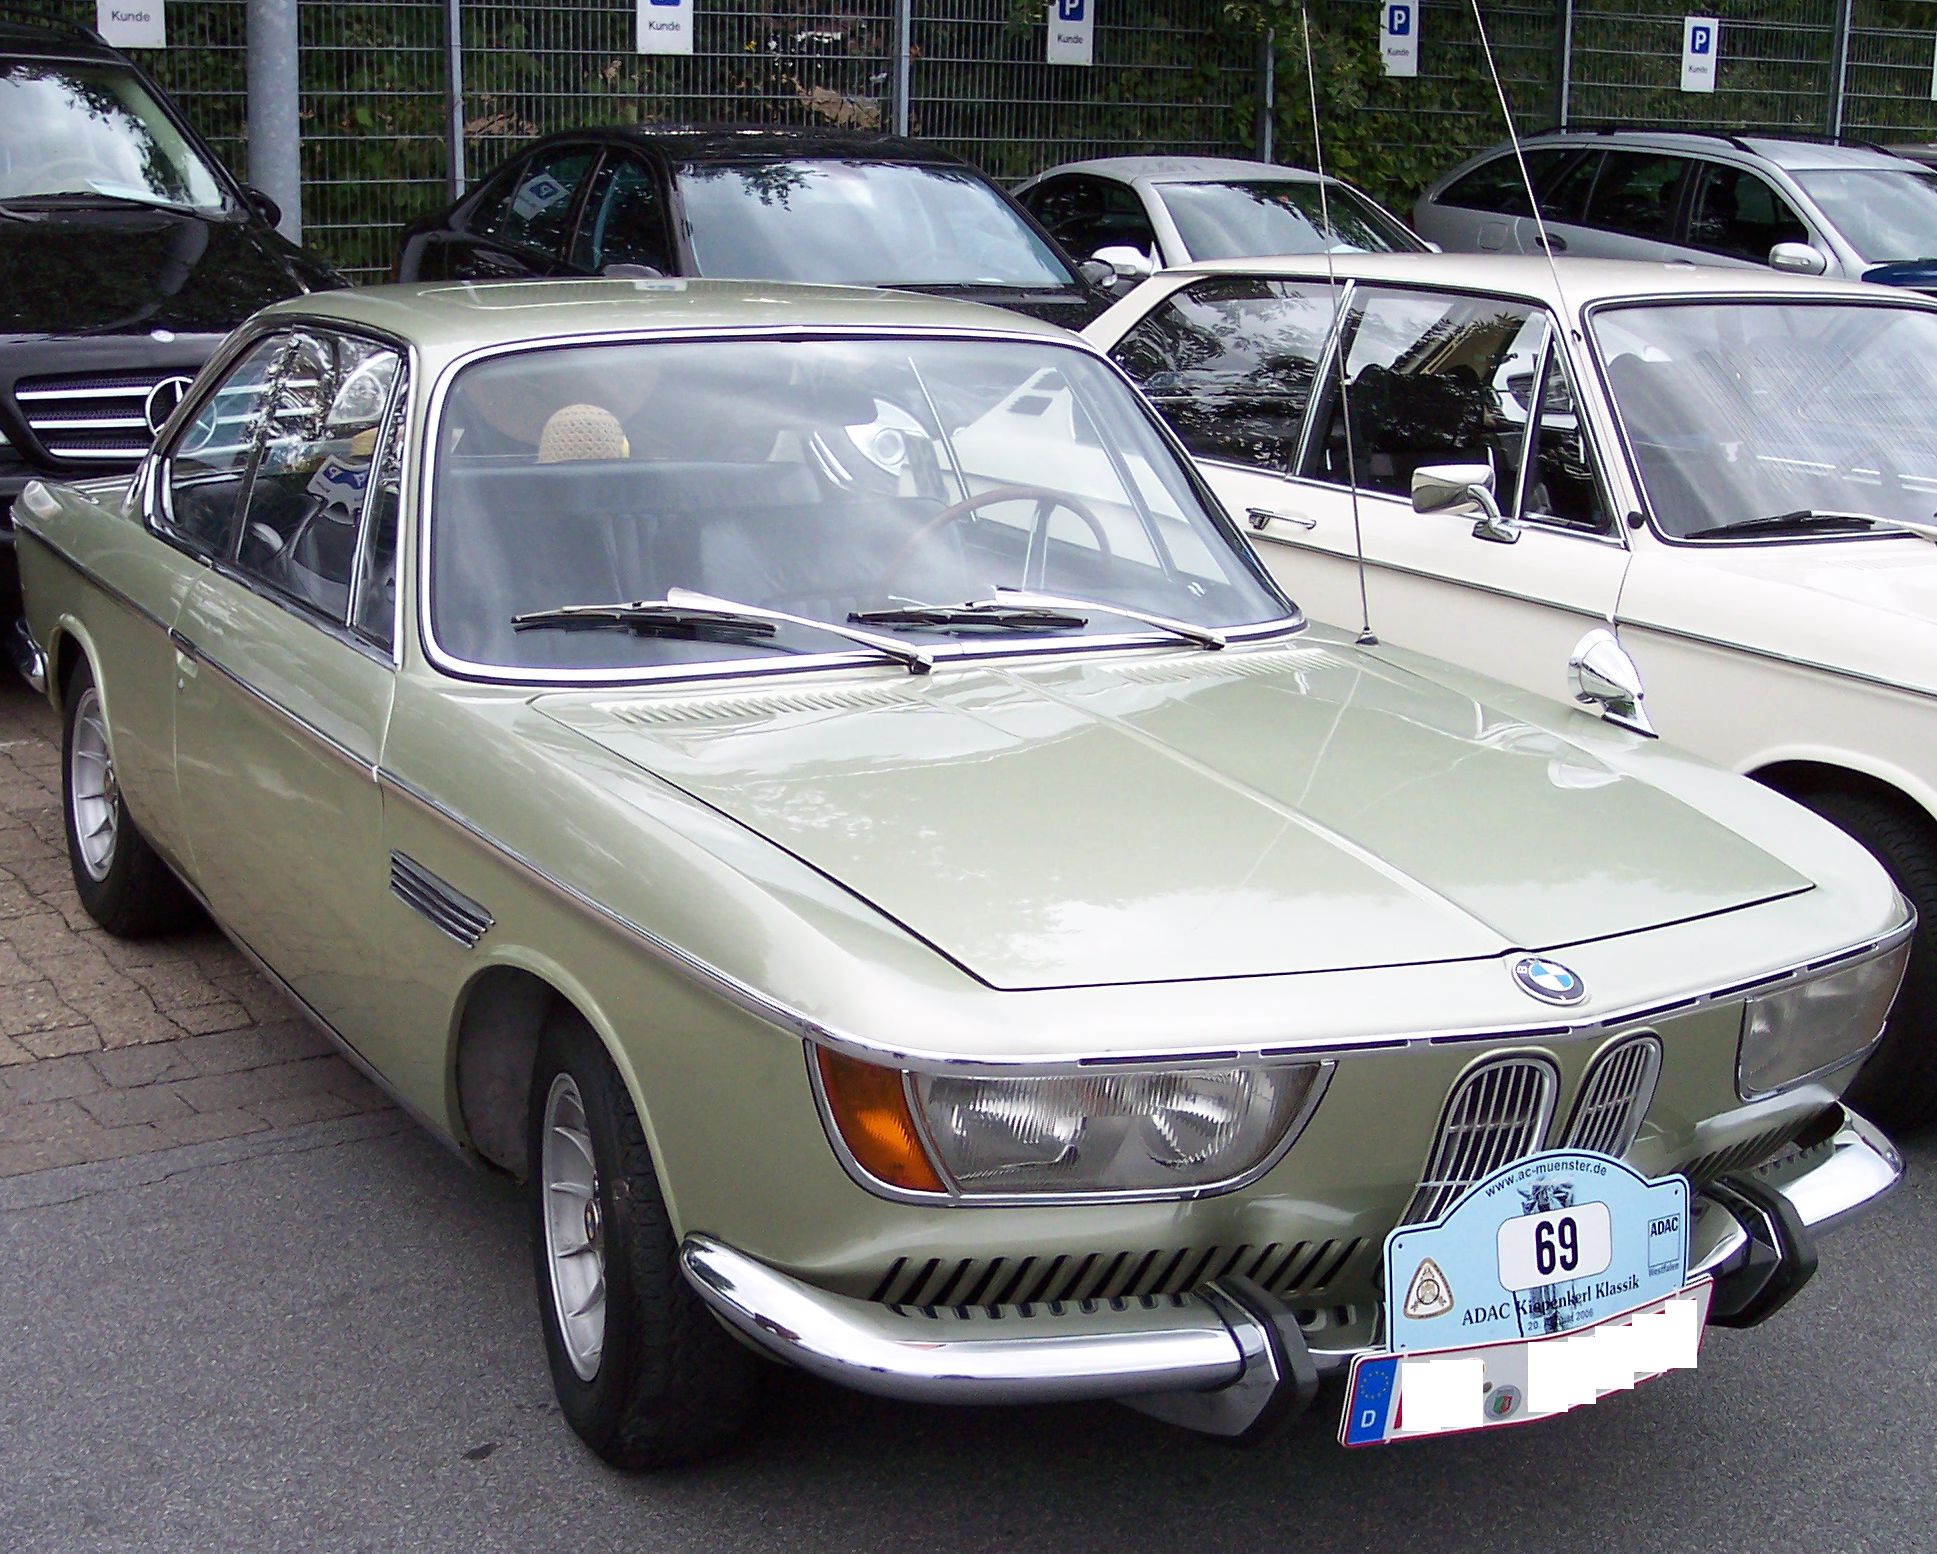 File:BMW 2000 CS champagne vr.jpg - Wikimedia Commons